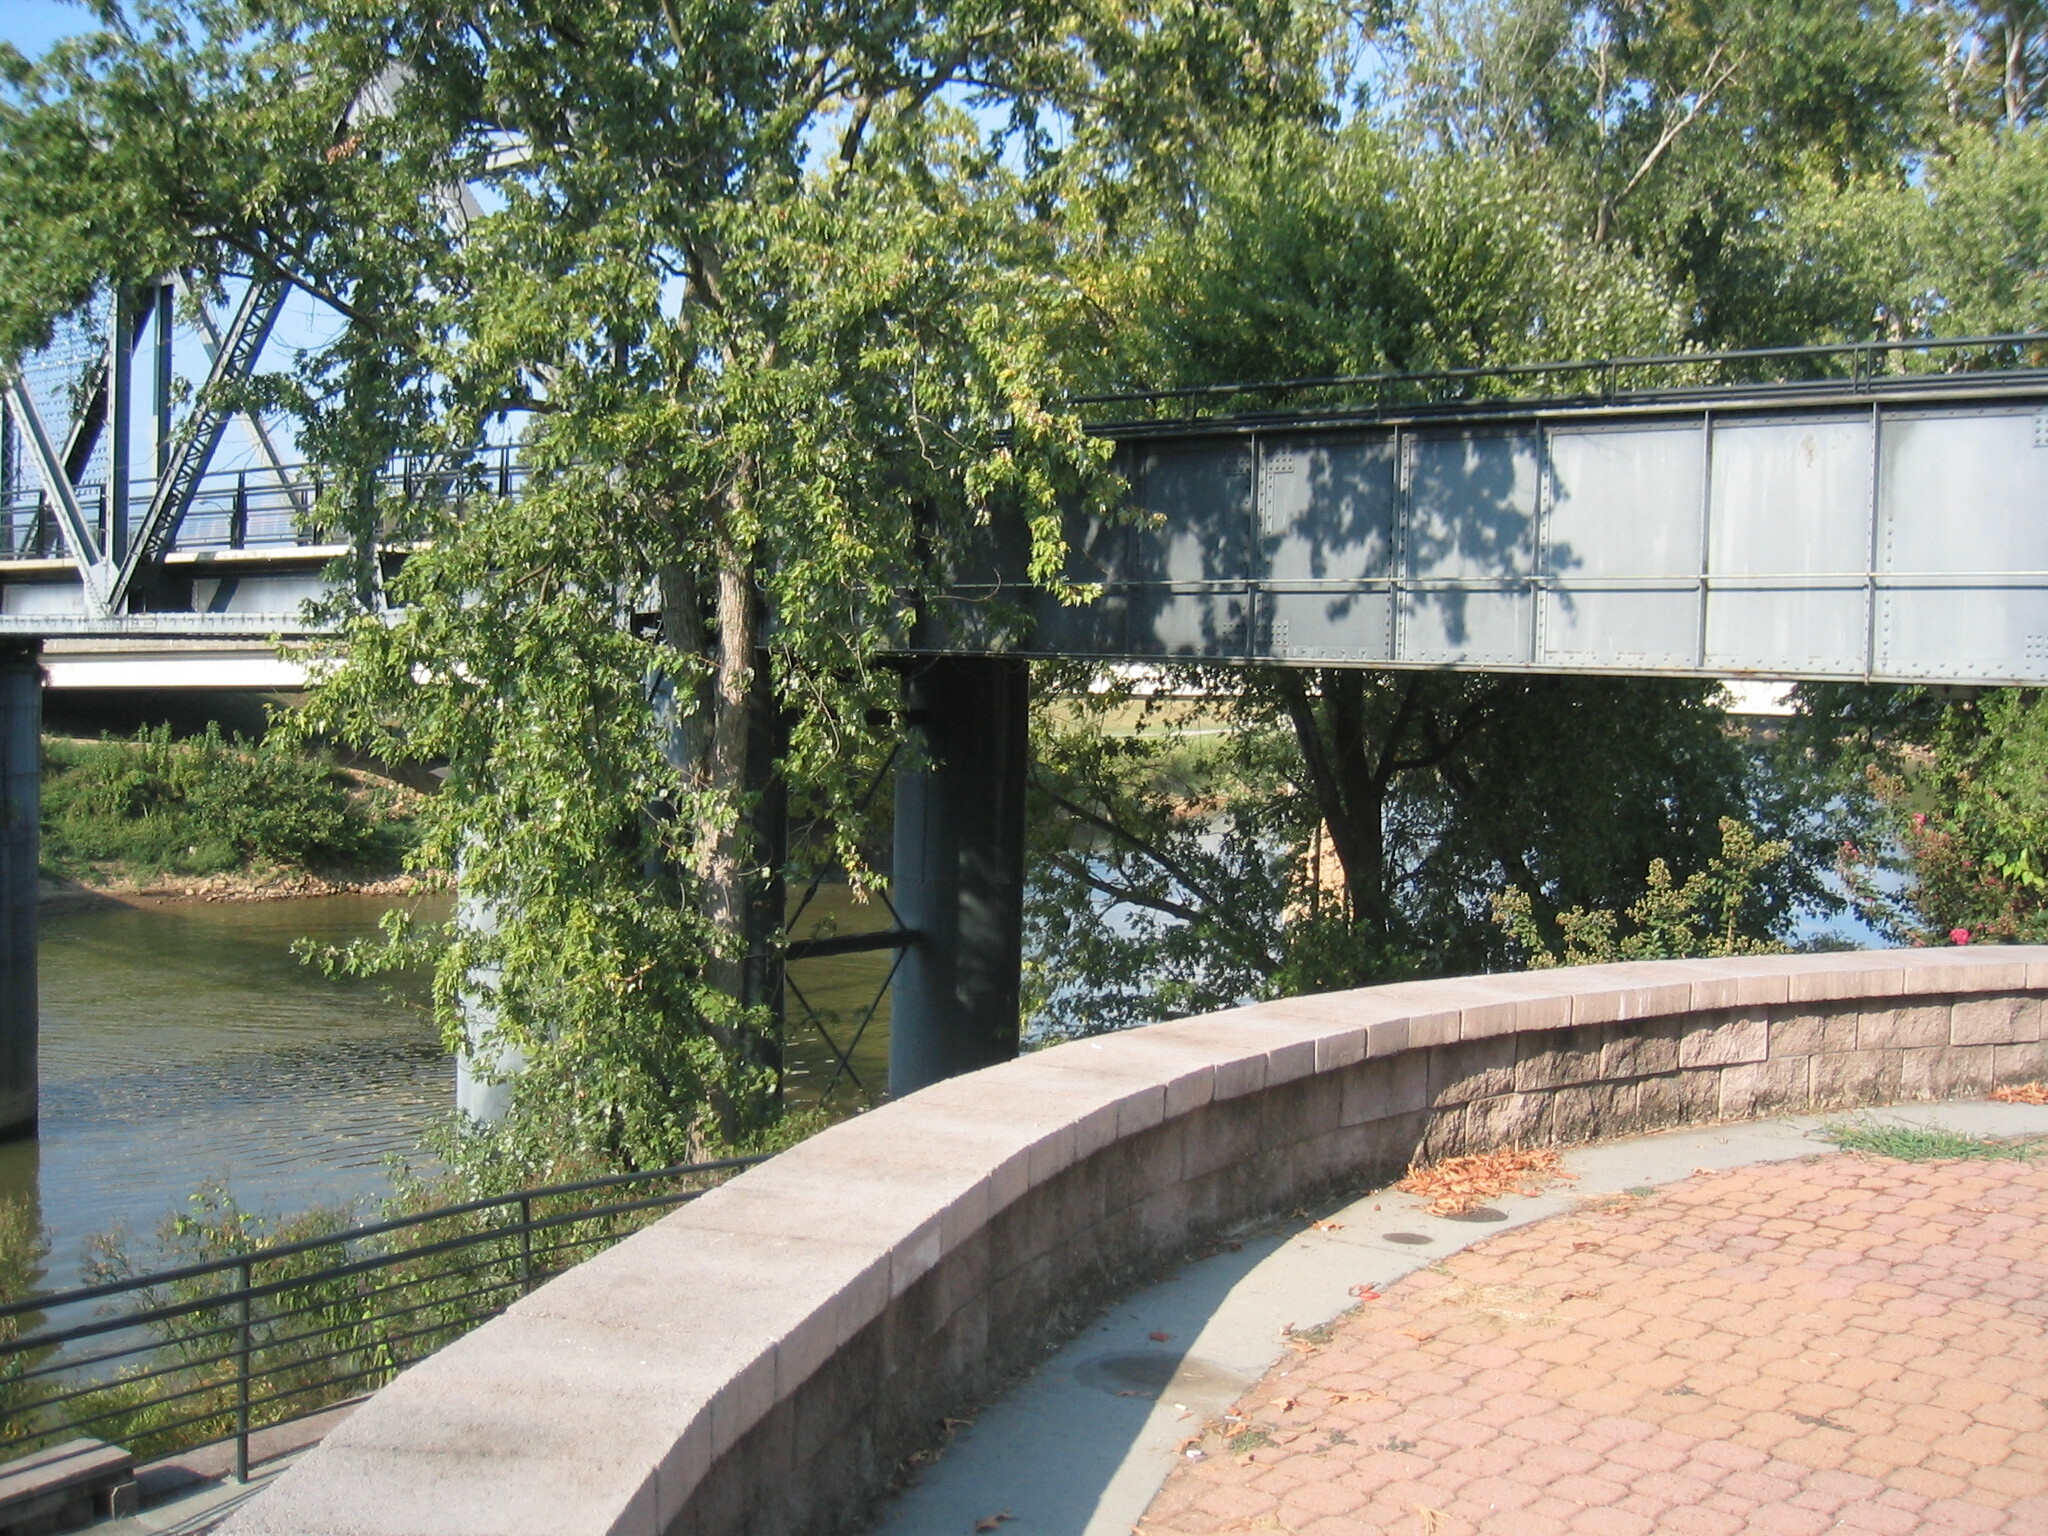 A bridge crosses the Coosa River in Rome, Georgia